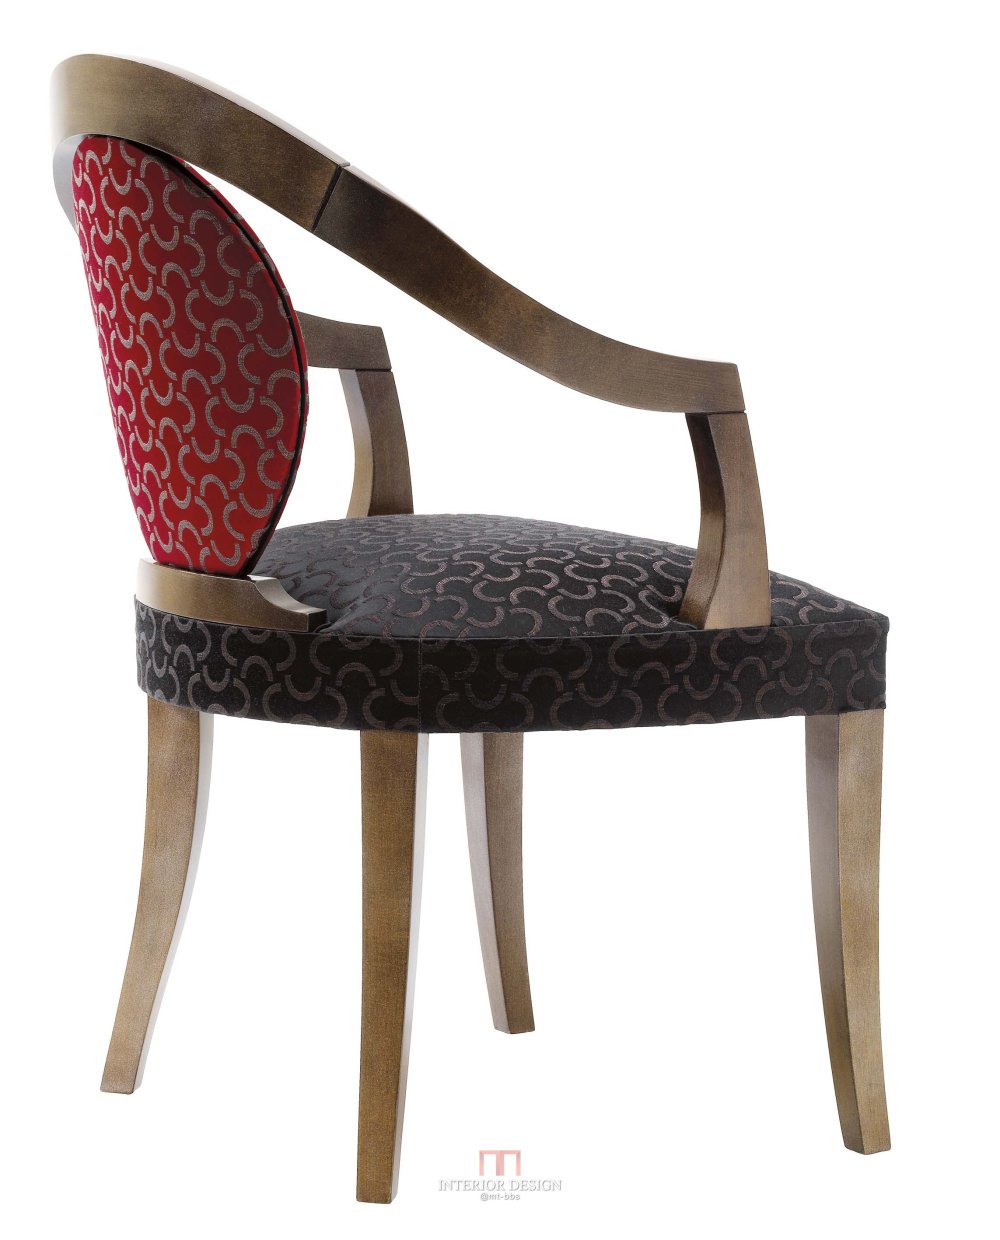 分享法国品牌Collinet 的几把椅子_1902 dos.jpg